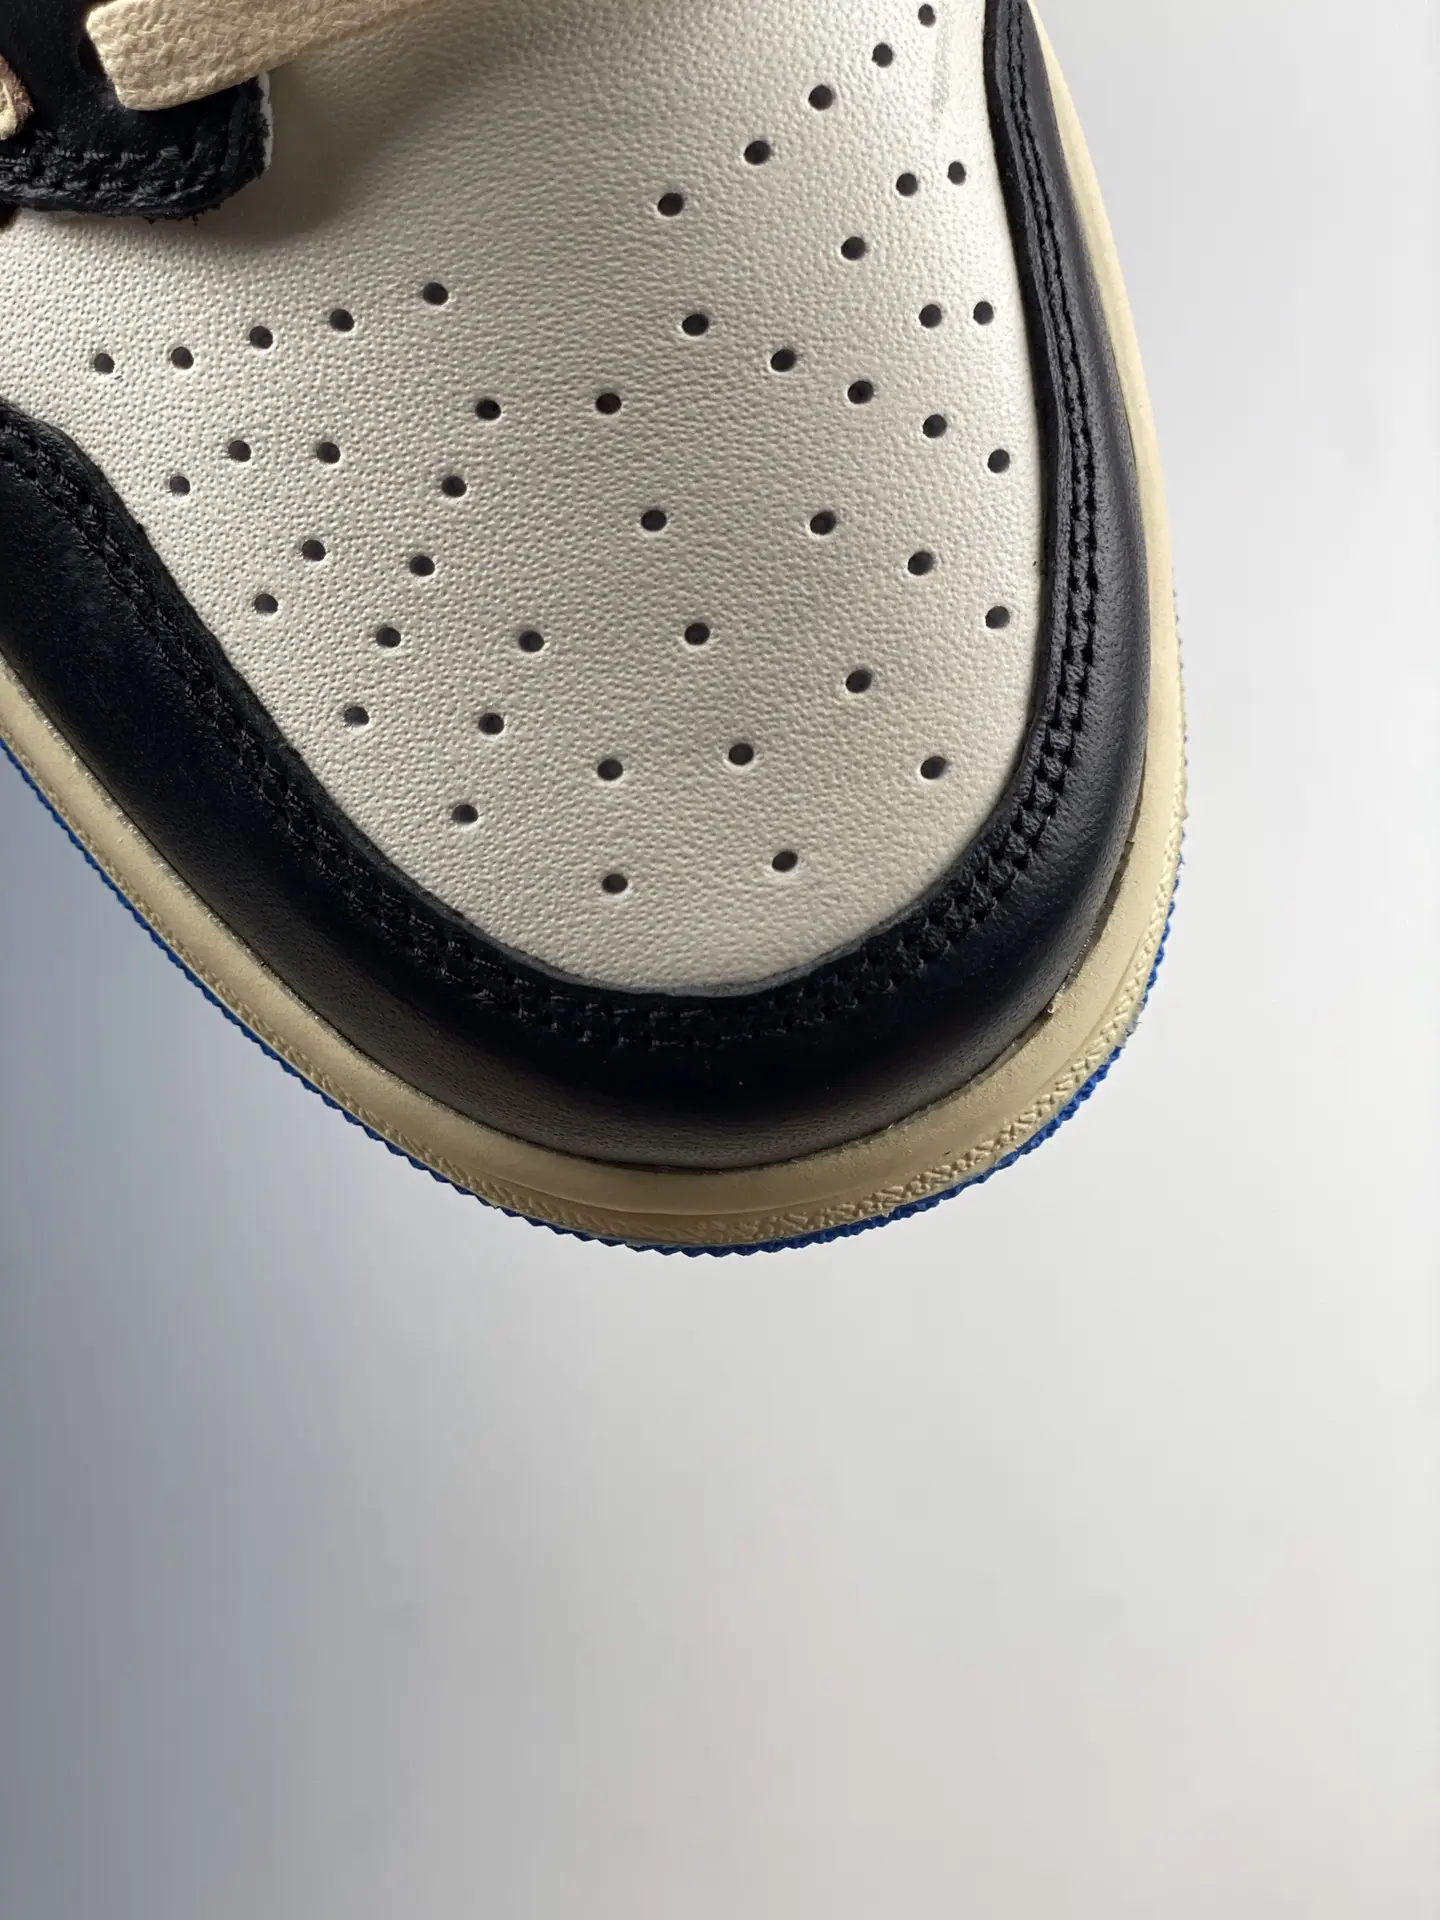 Travis Scott x fragment x Air Jordan 1 Low OG Sneaker Review | YtaYta